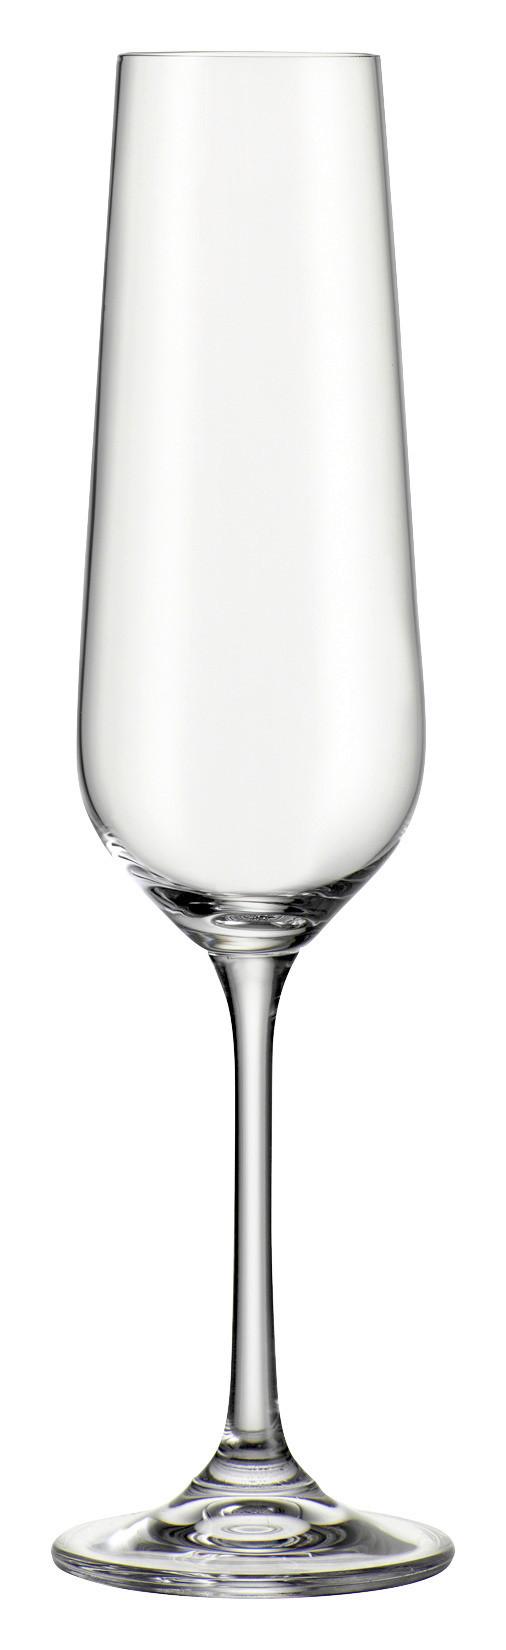 Pahar vin spumant Norma - clar, Modern, sticlă (0,22l) - Bohemia